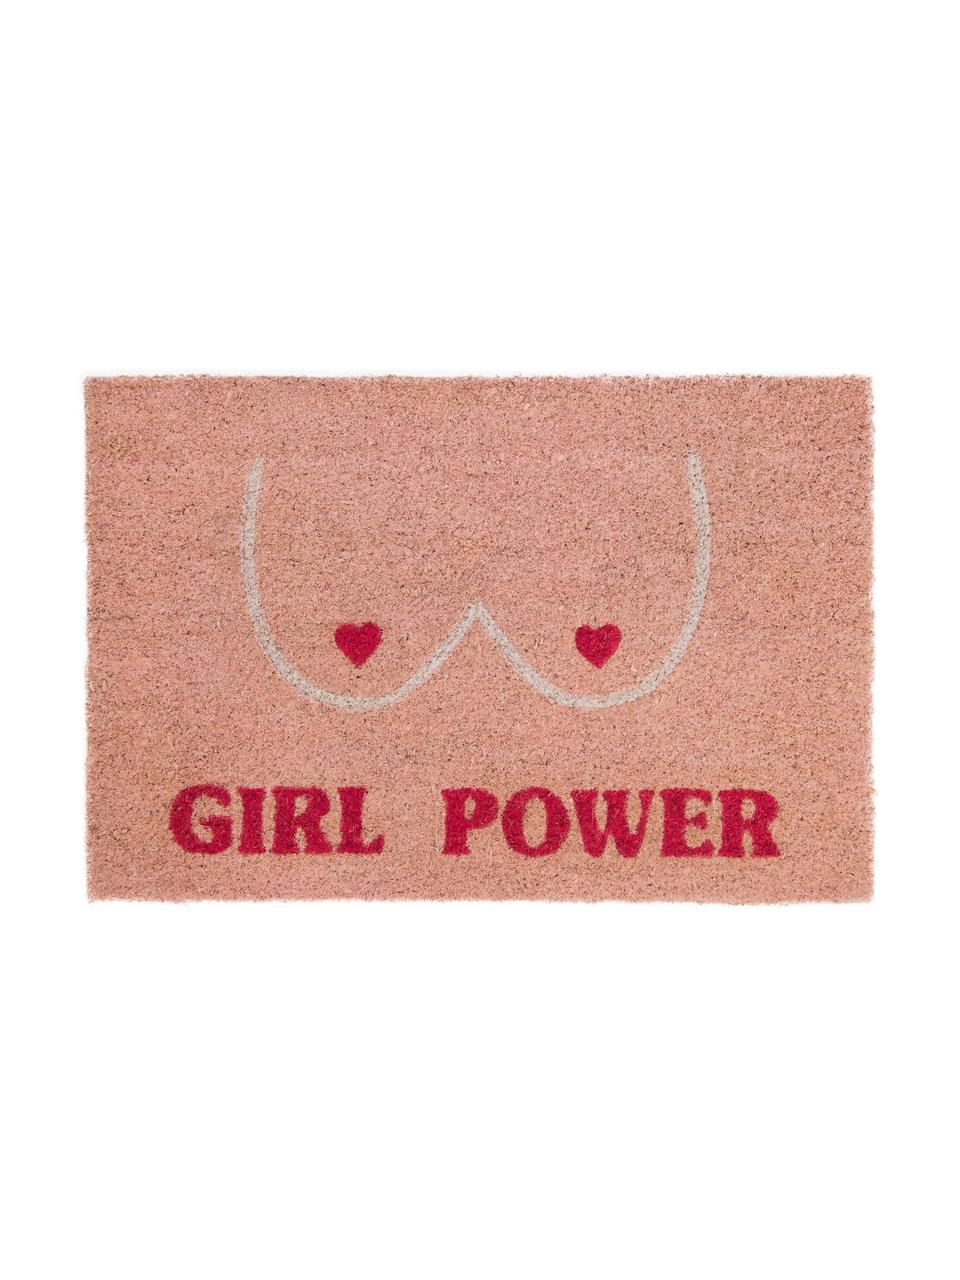 Paillasson Girl Power, Rose, larg. 40 x long. 60 cm